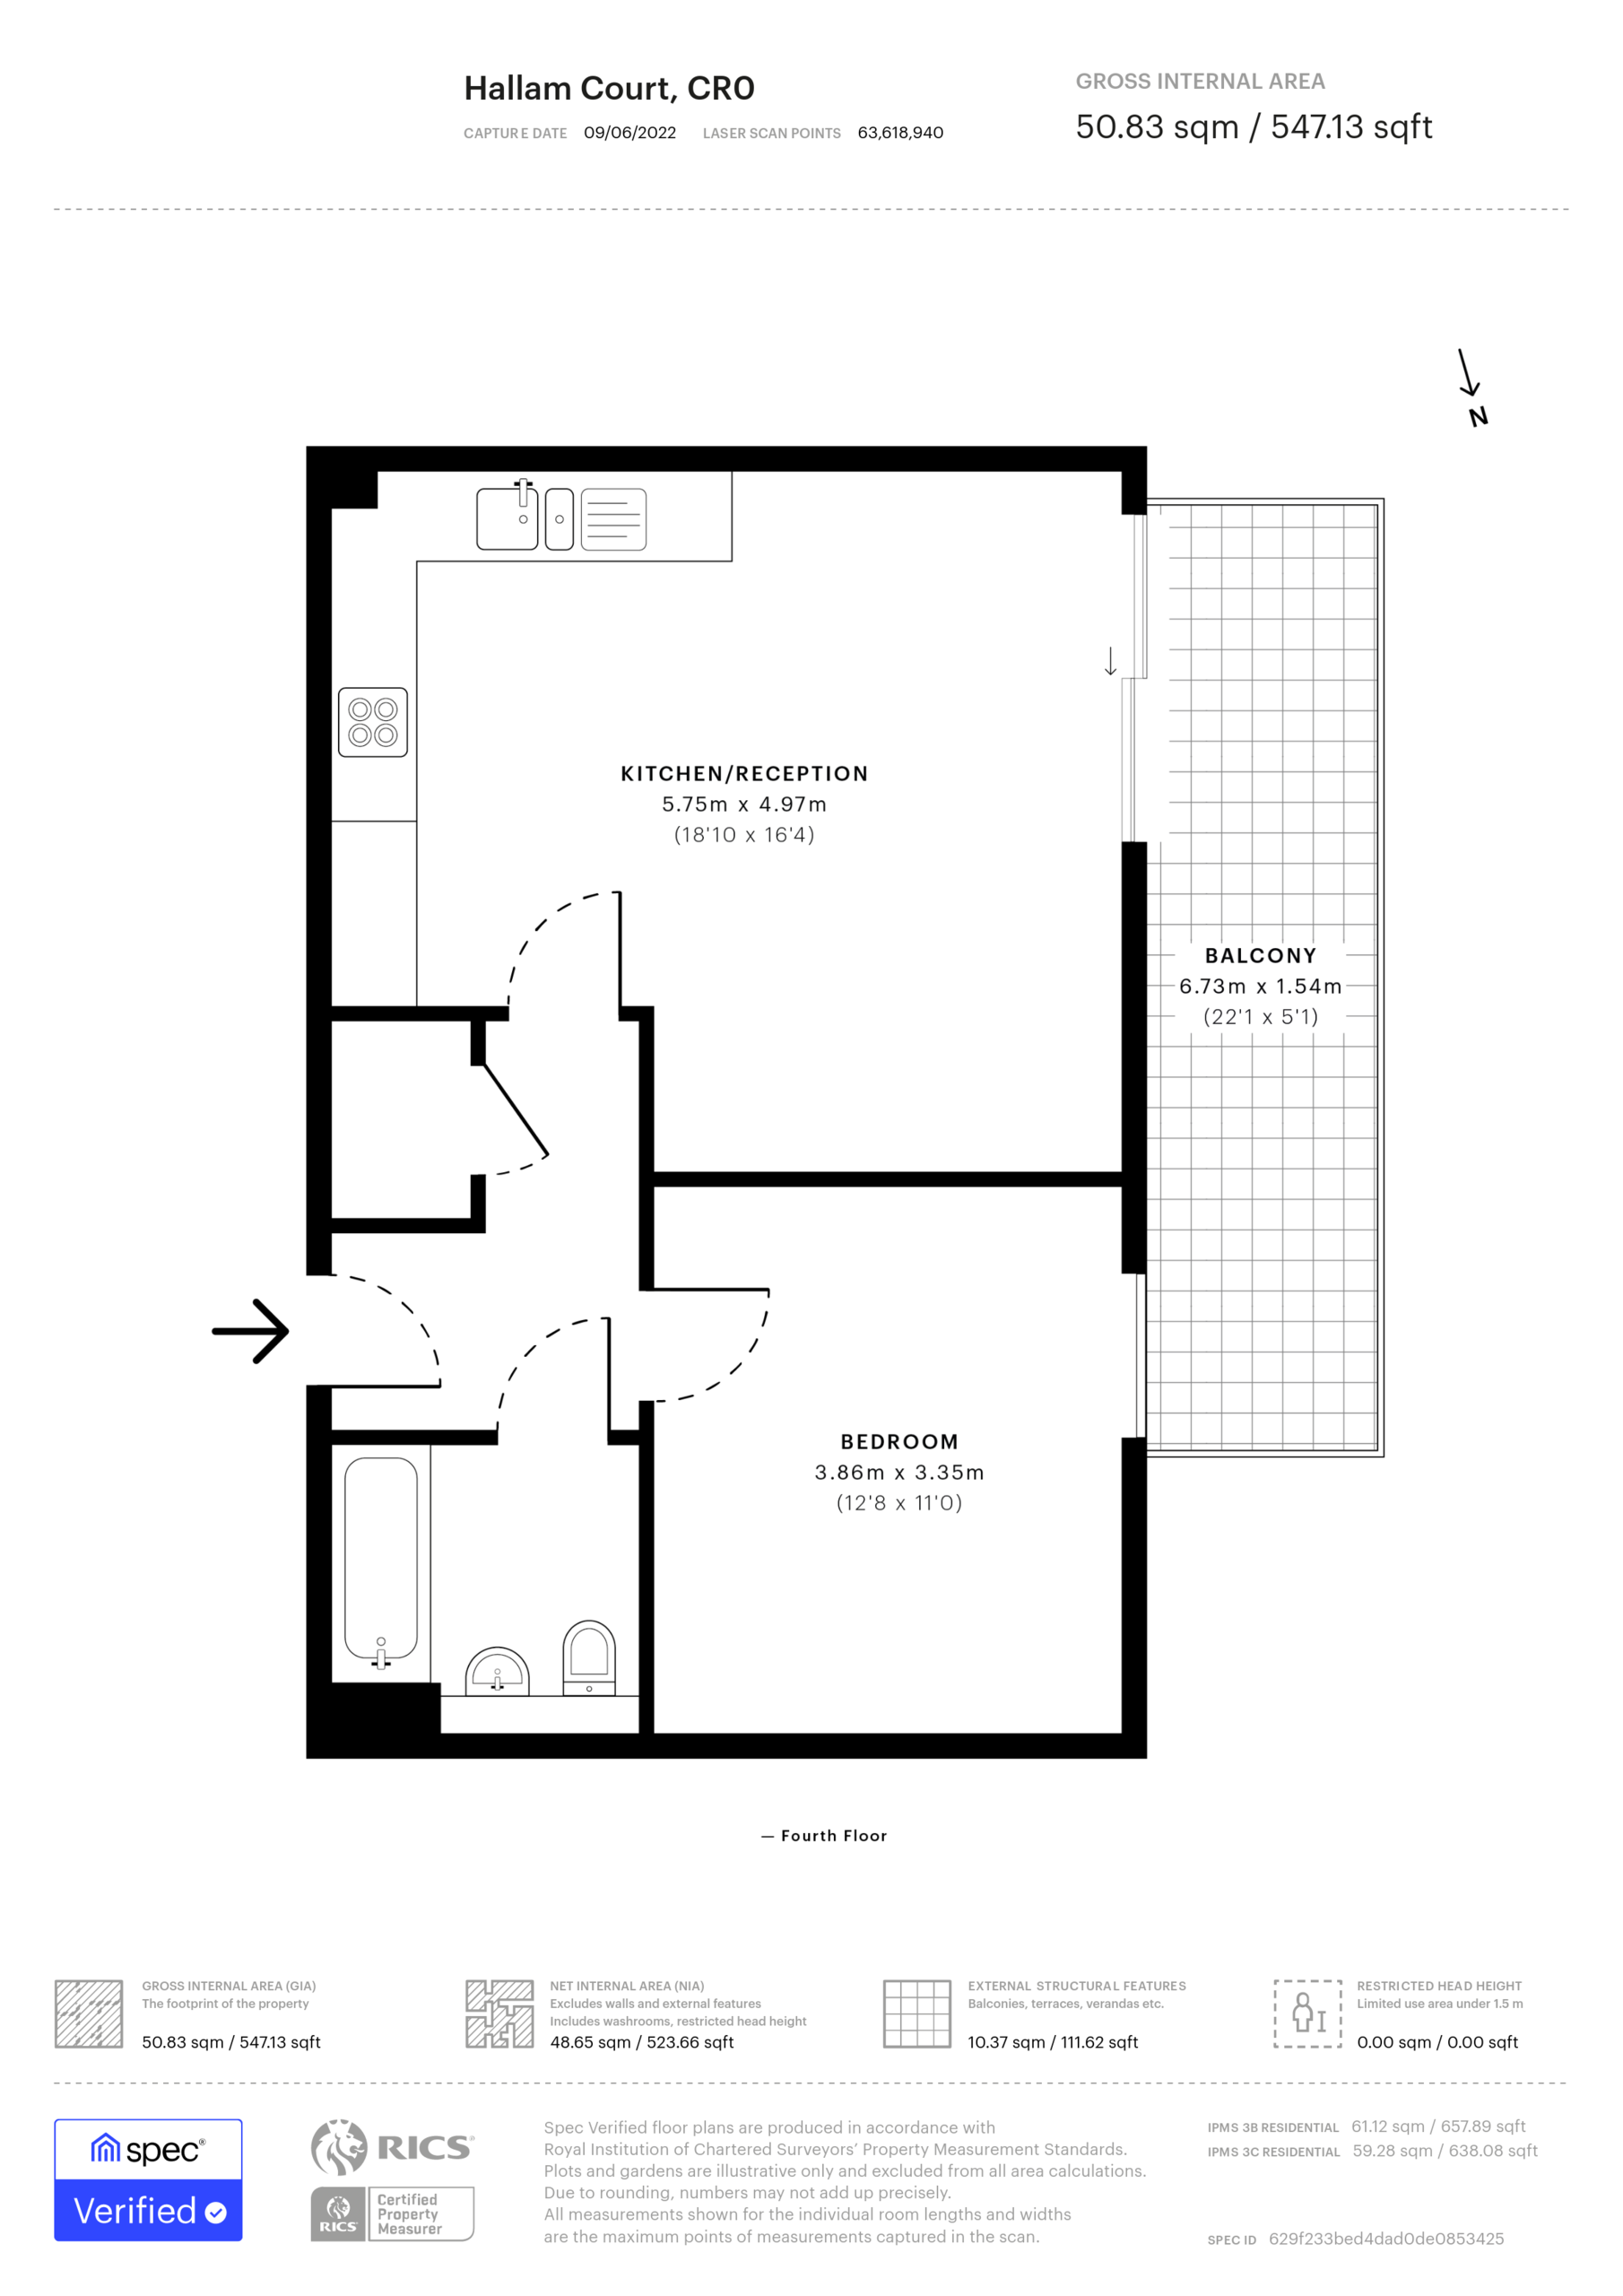 1 bed apartment to rent in Hallam Court, Croydon - Property floorplan